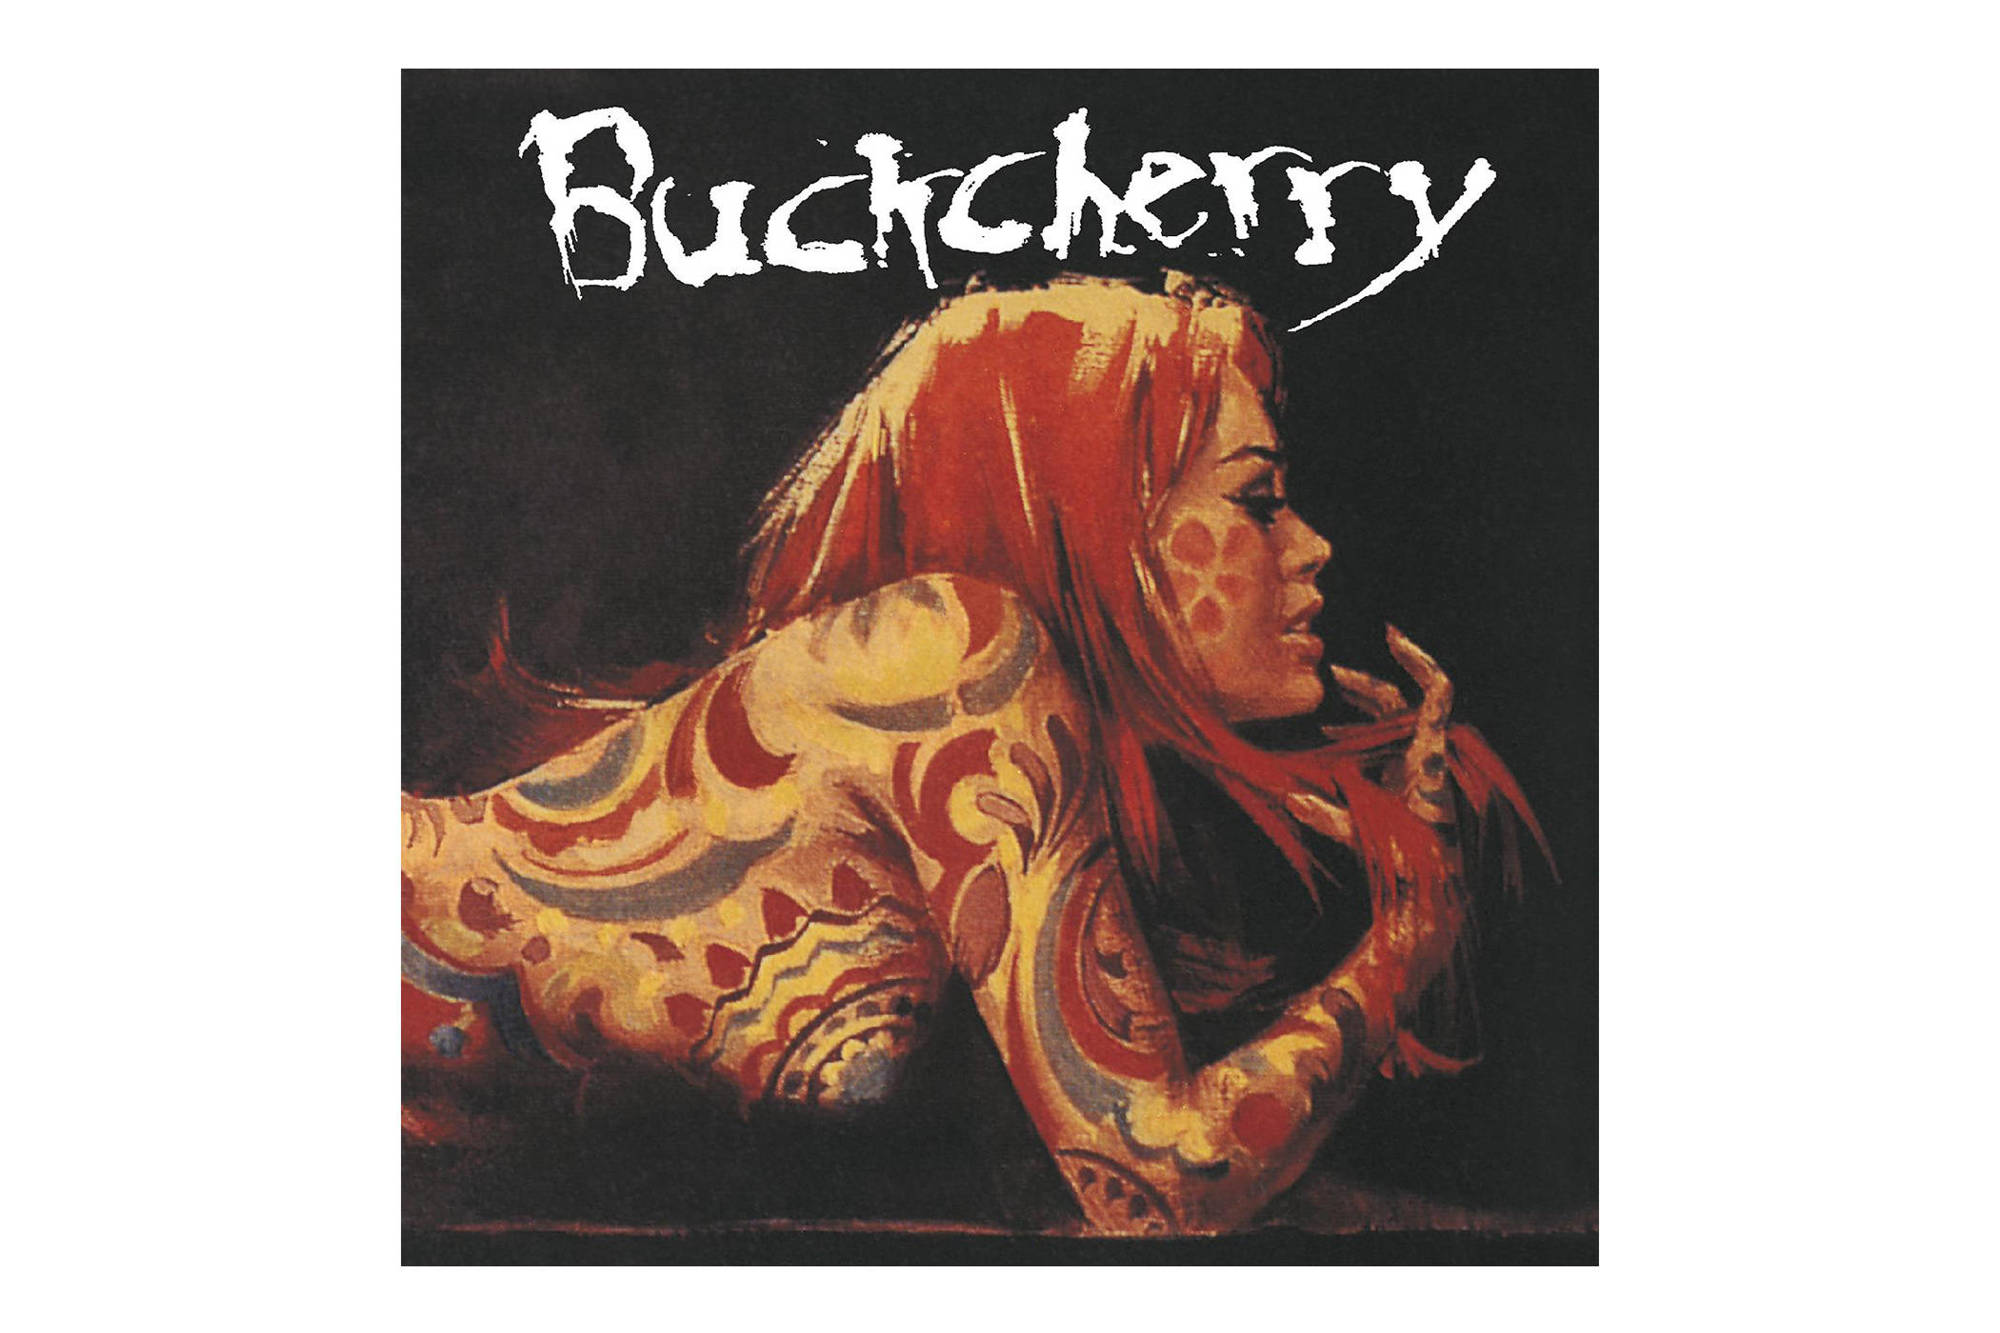 Vinyl record Buckcherry - Buckcherry